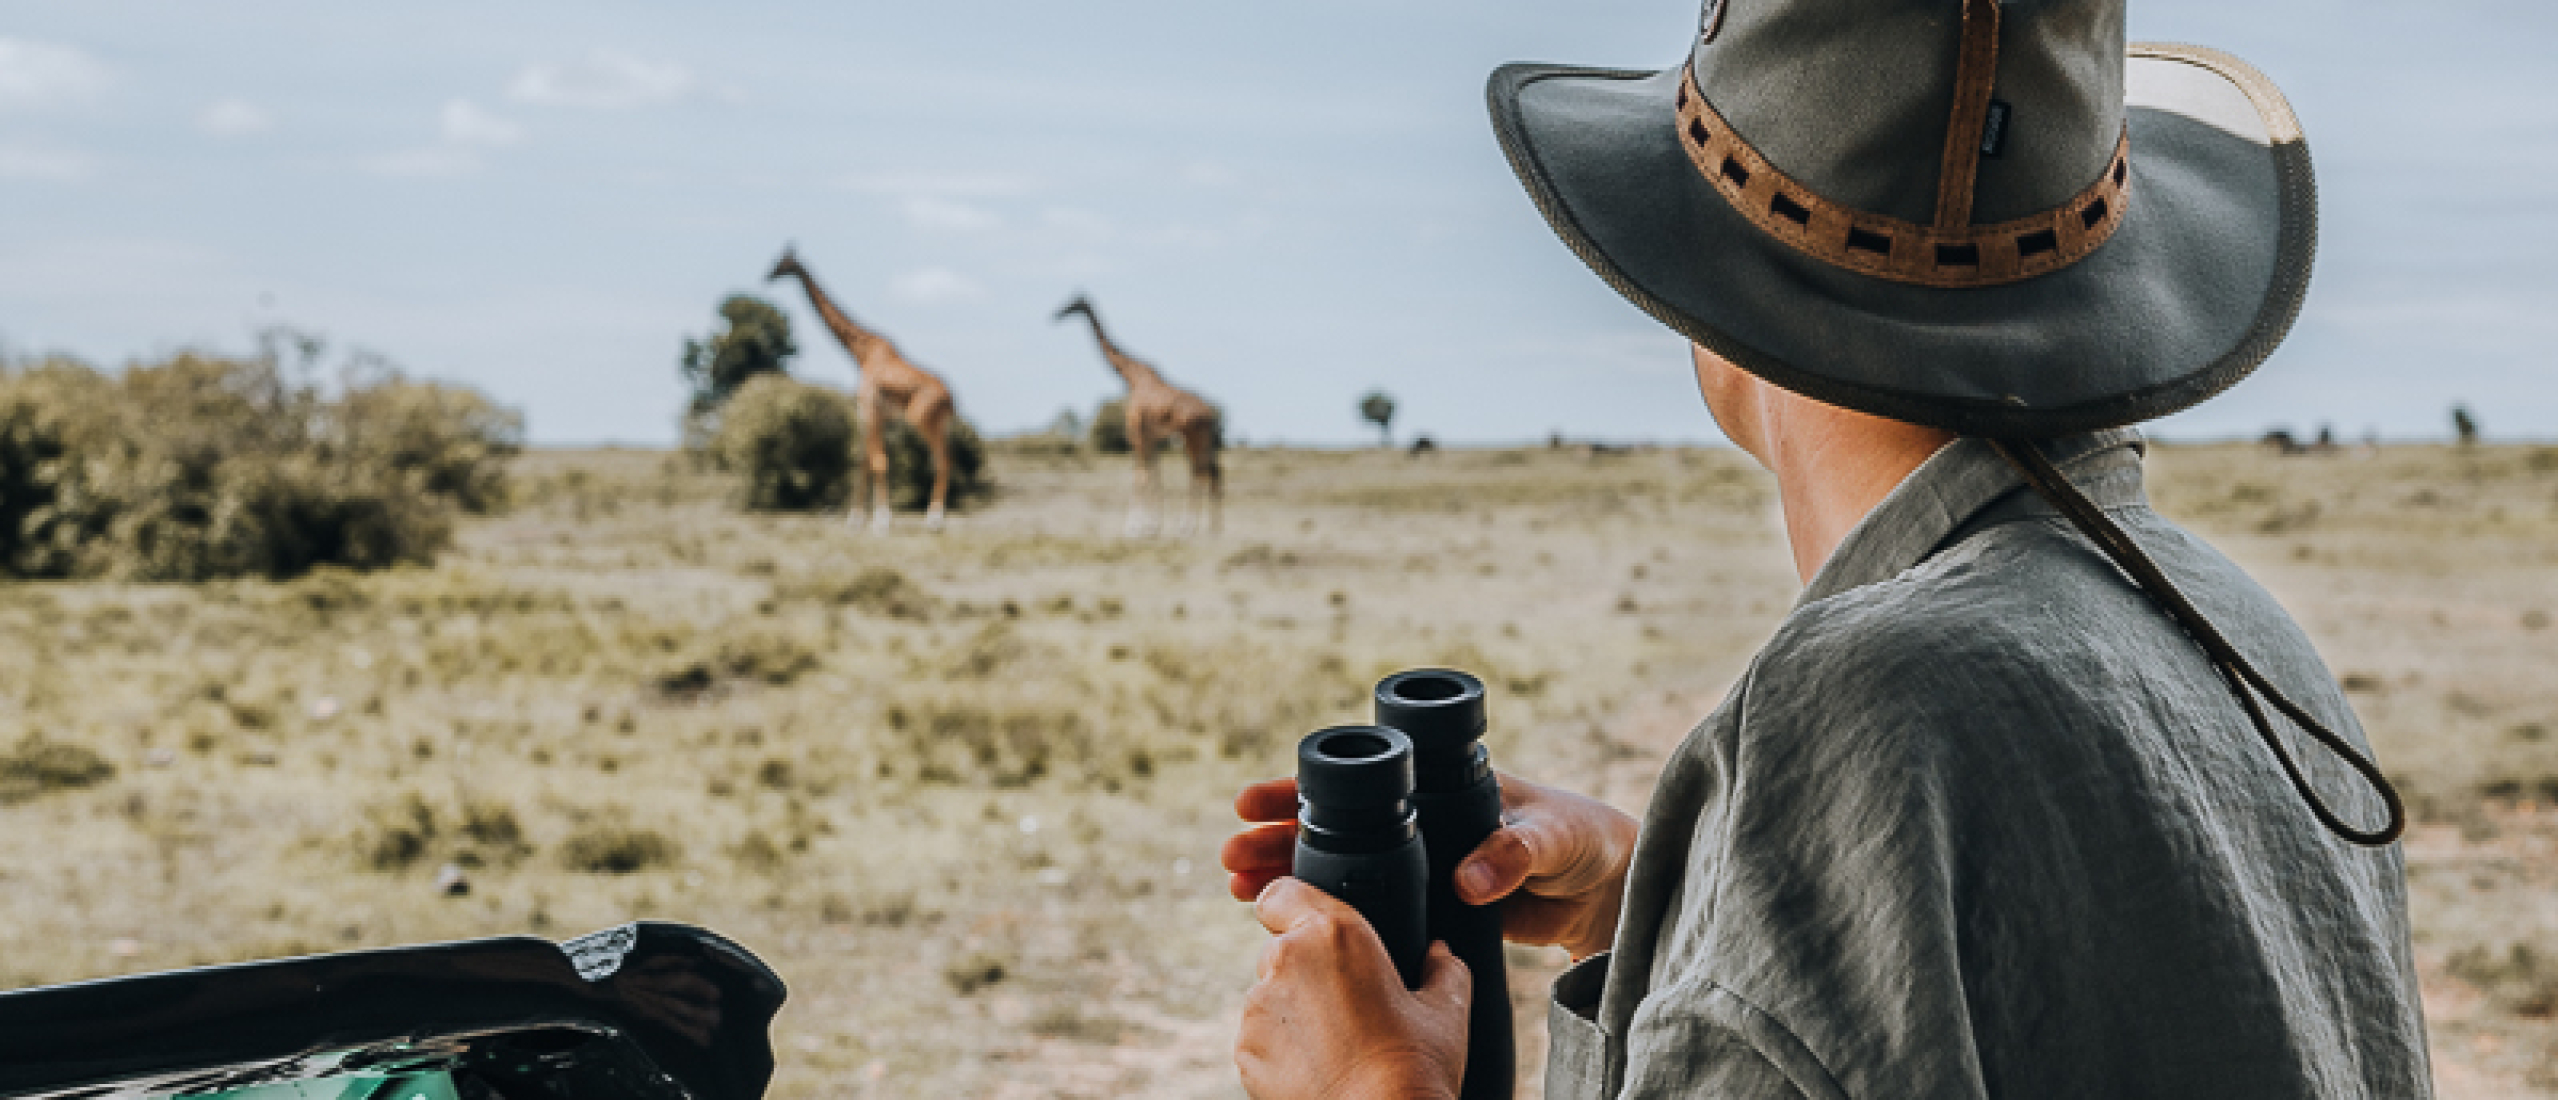 Safari Guide Course in Kenya: 14 reasons to join!